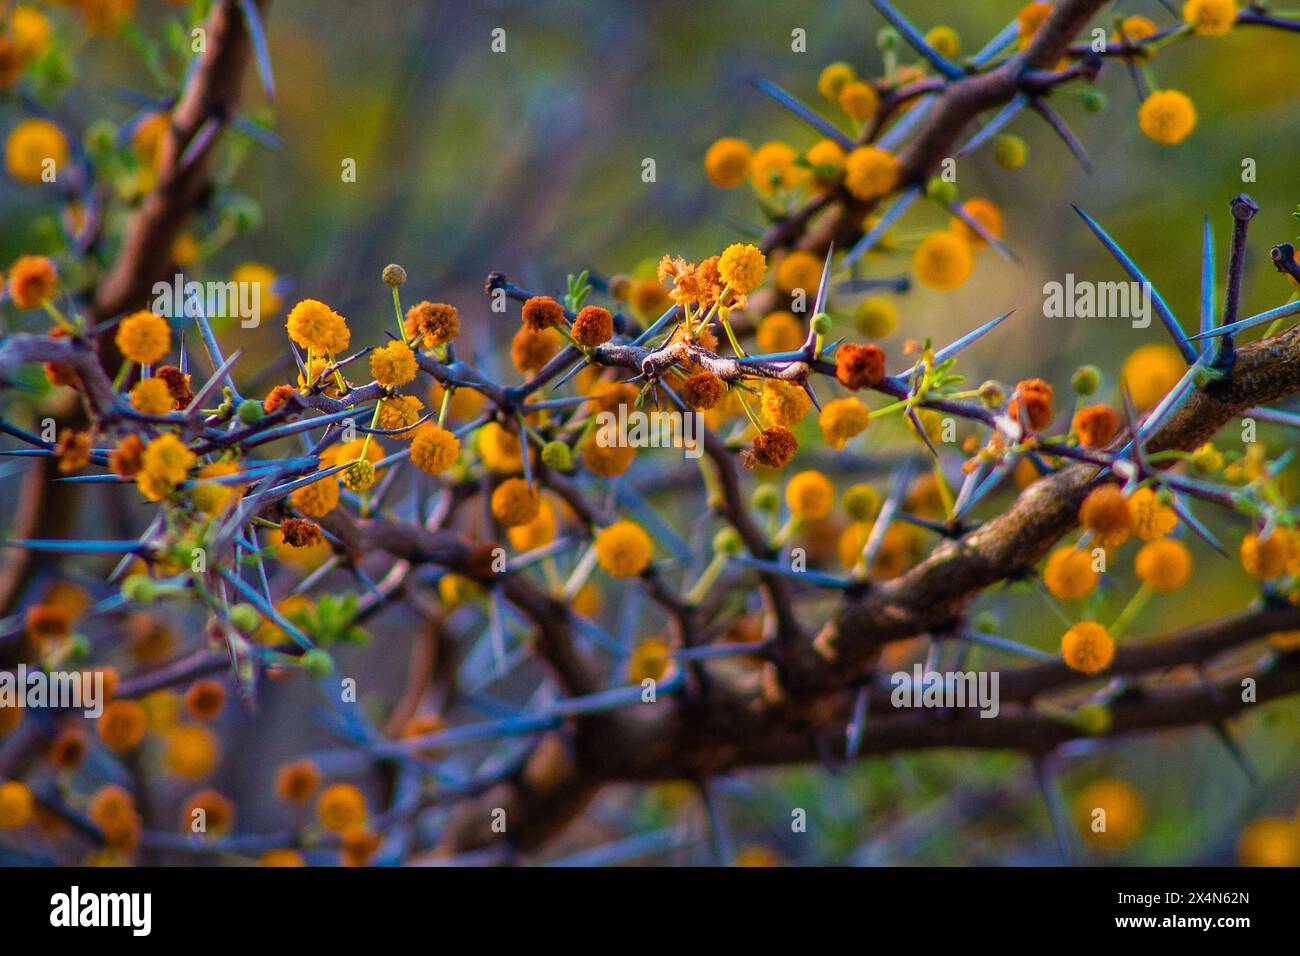 Yellow flowers of Acacia dealbata tree, Acacia dealbata. Stock Photo